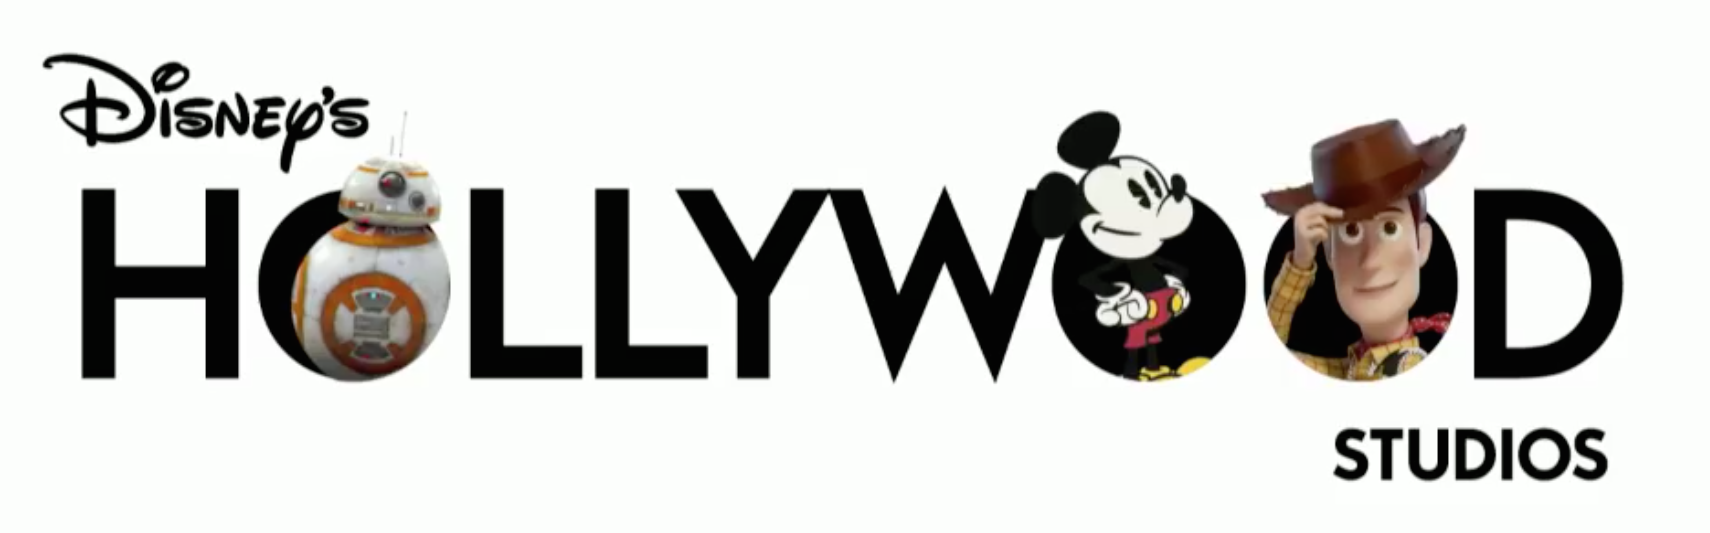 disney's hollywood studios new logo